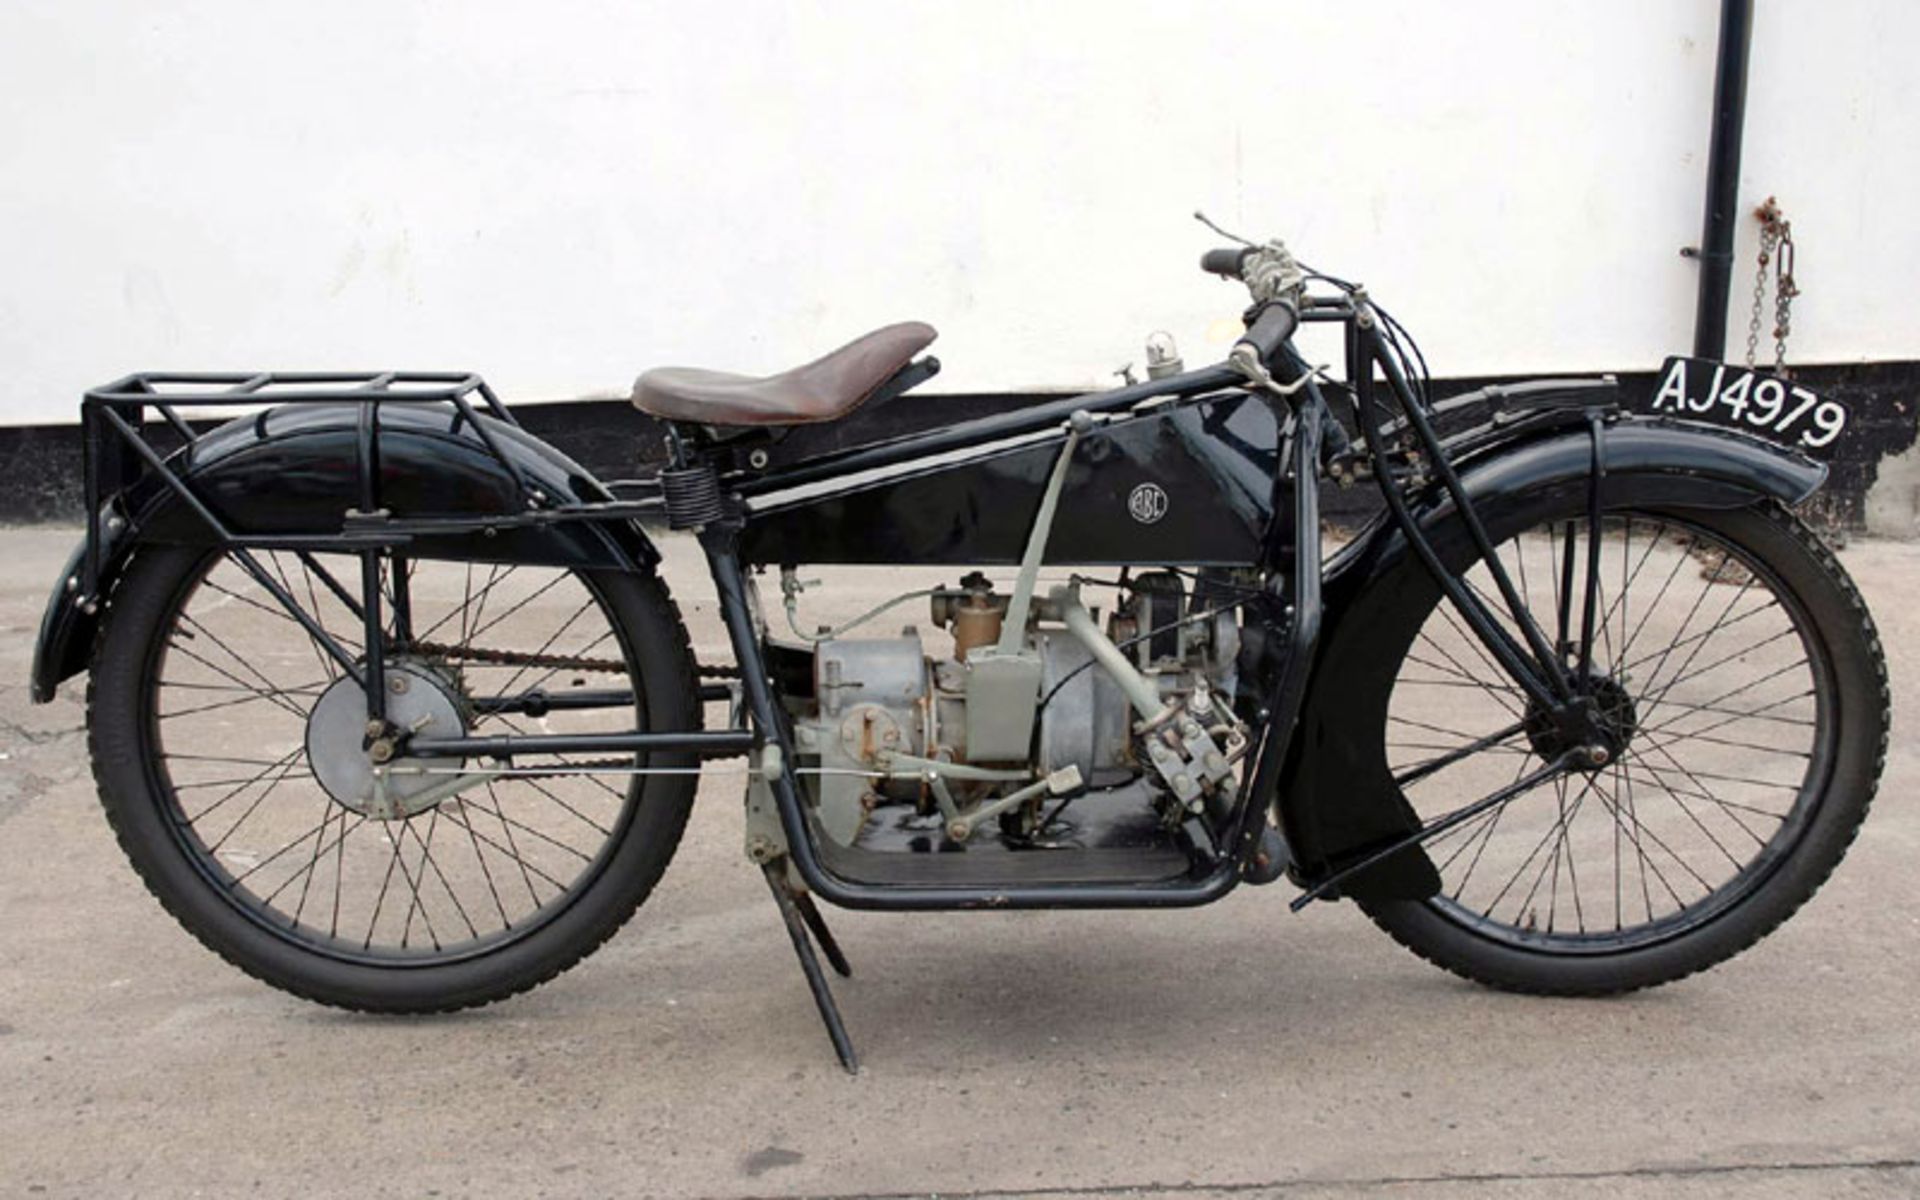 1921 ABC 398cc